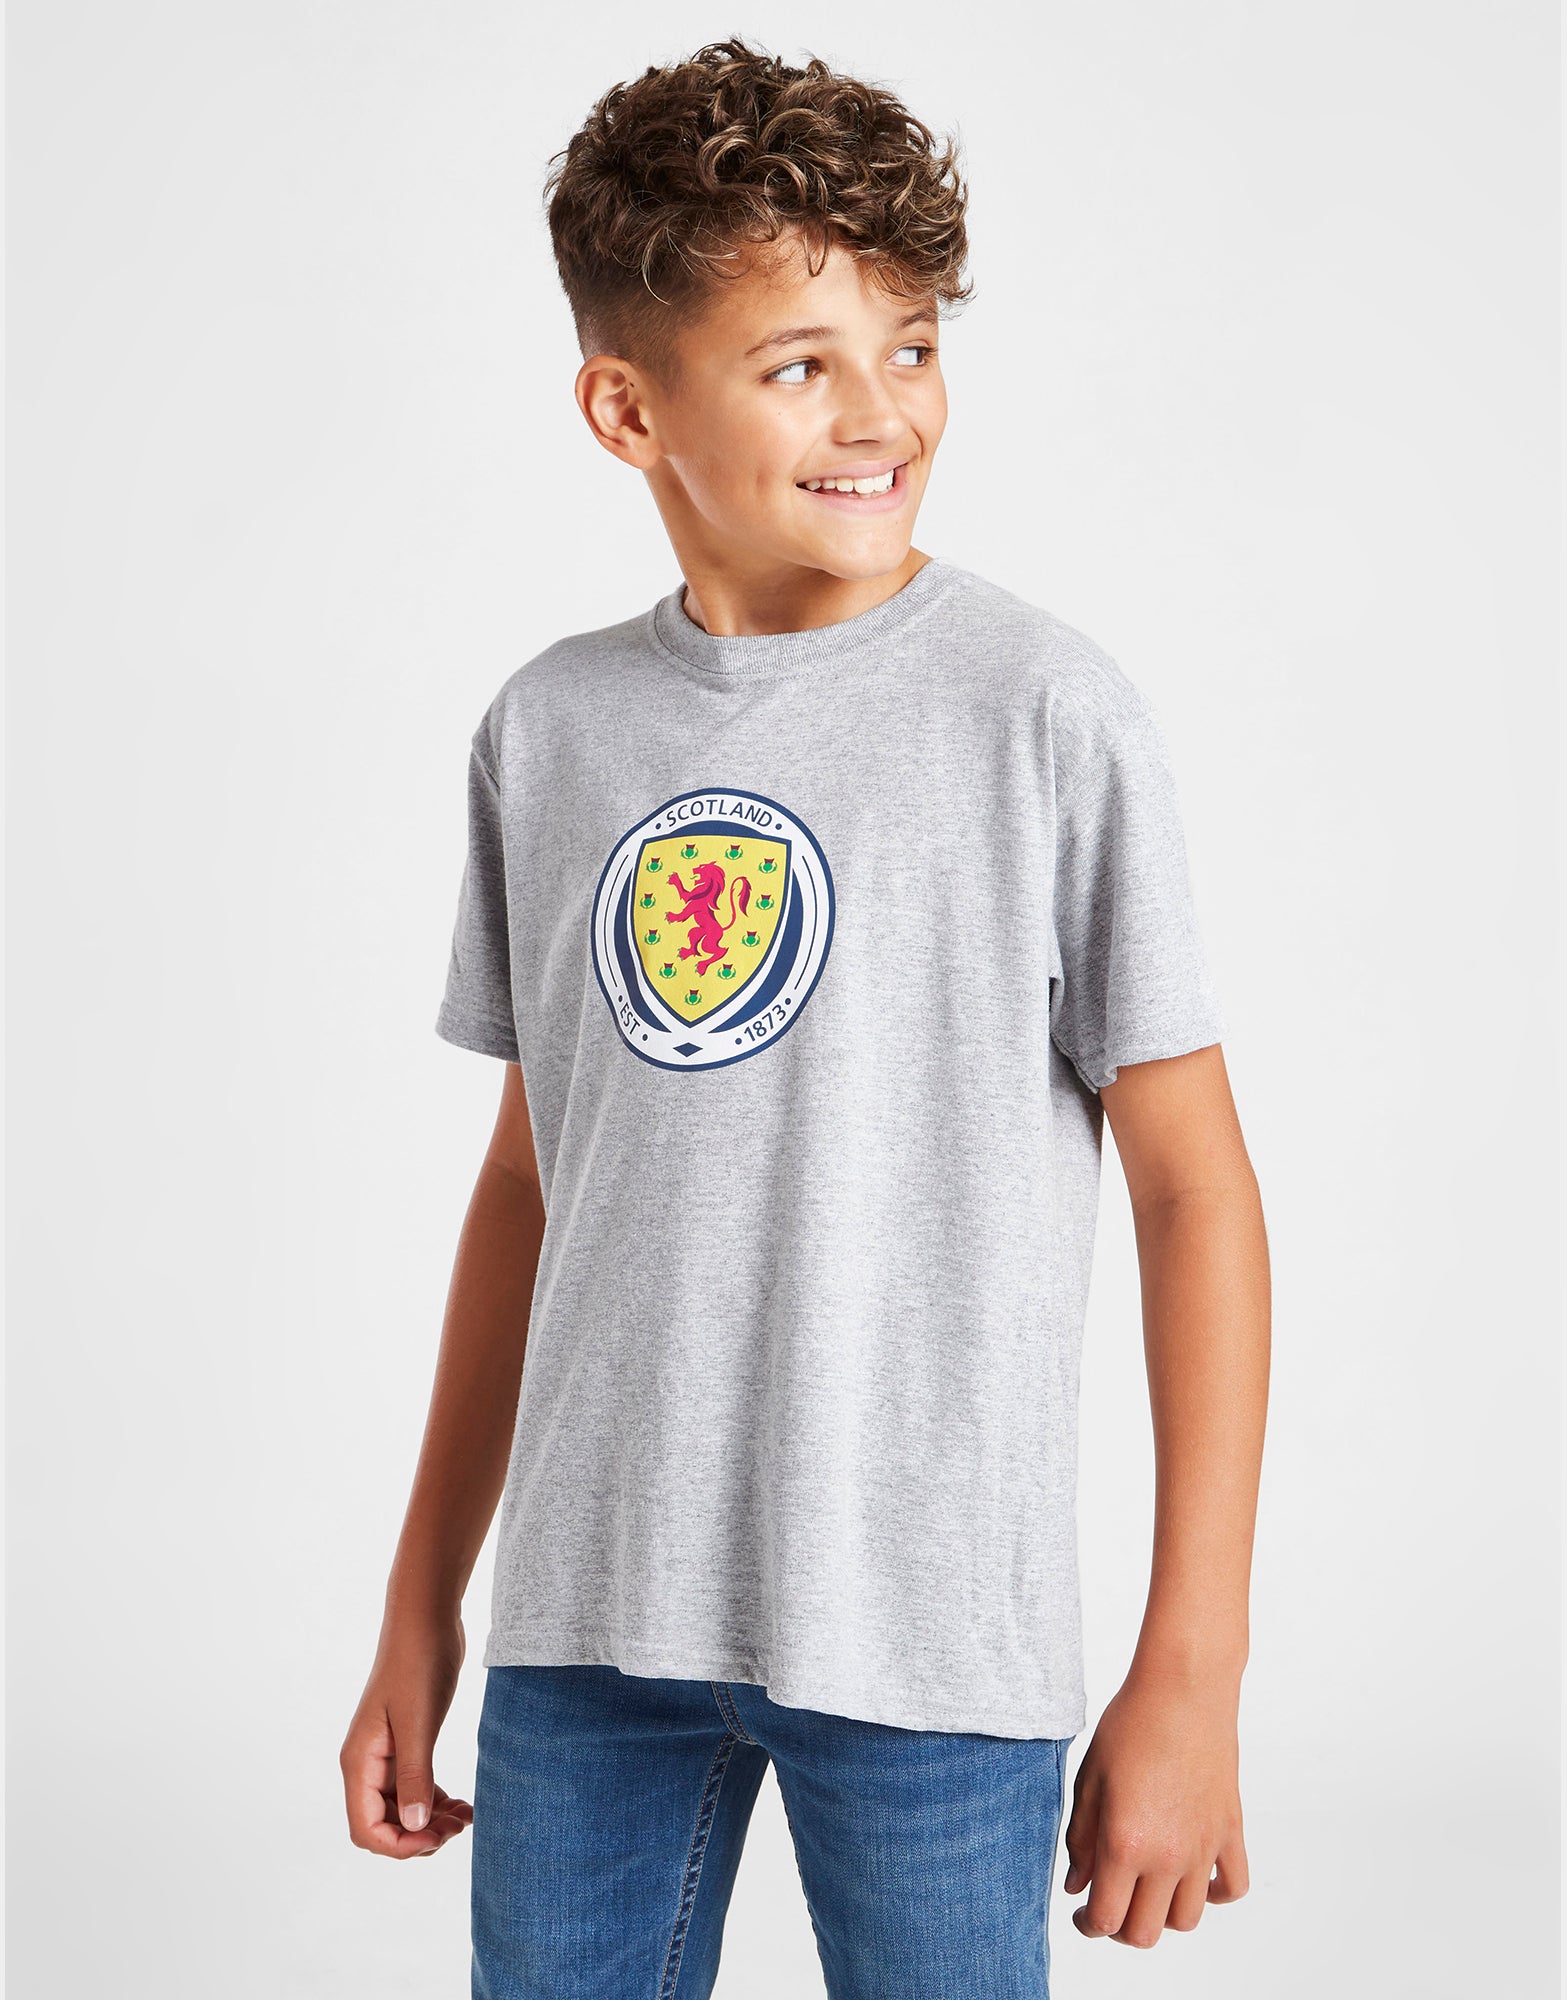 Official Team Scotland Kids FA logo T-Shirt - Grey - The World Football Store